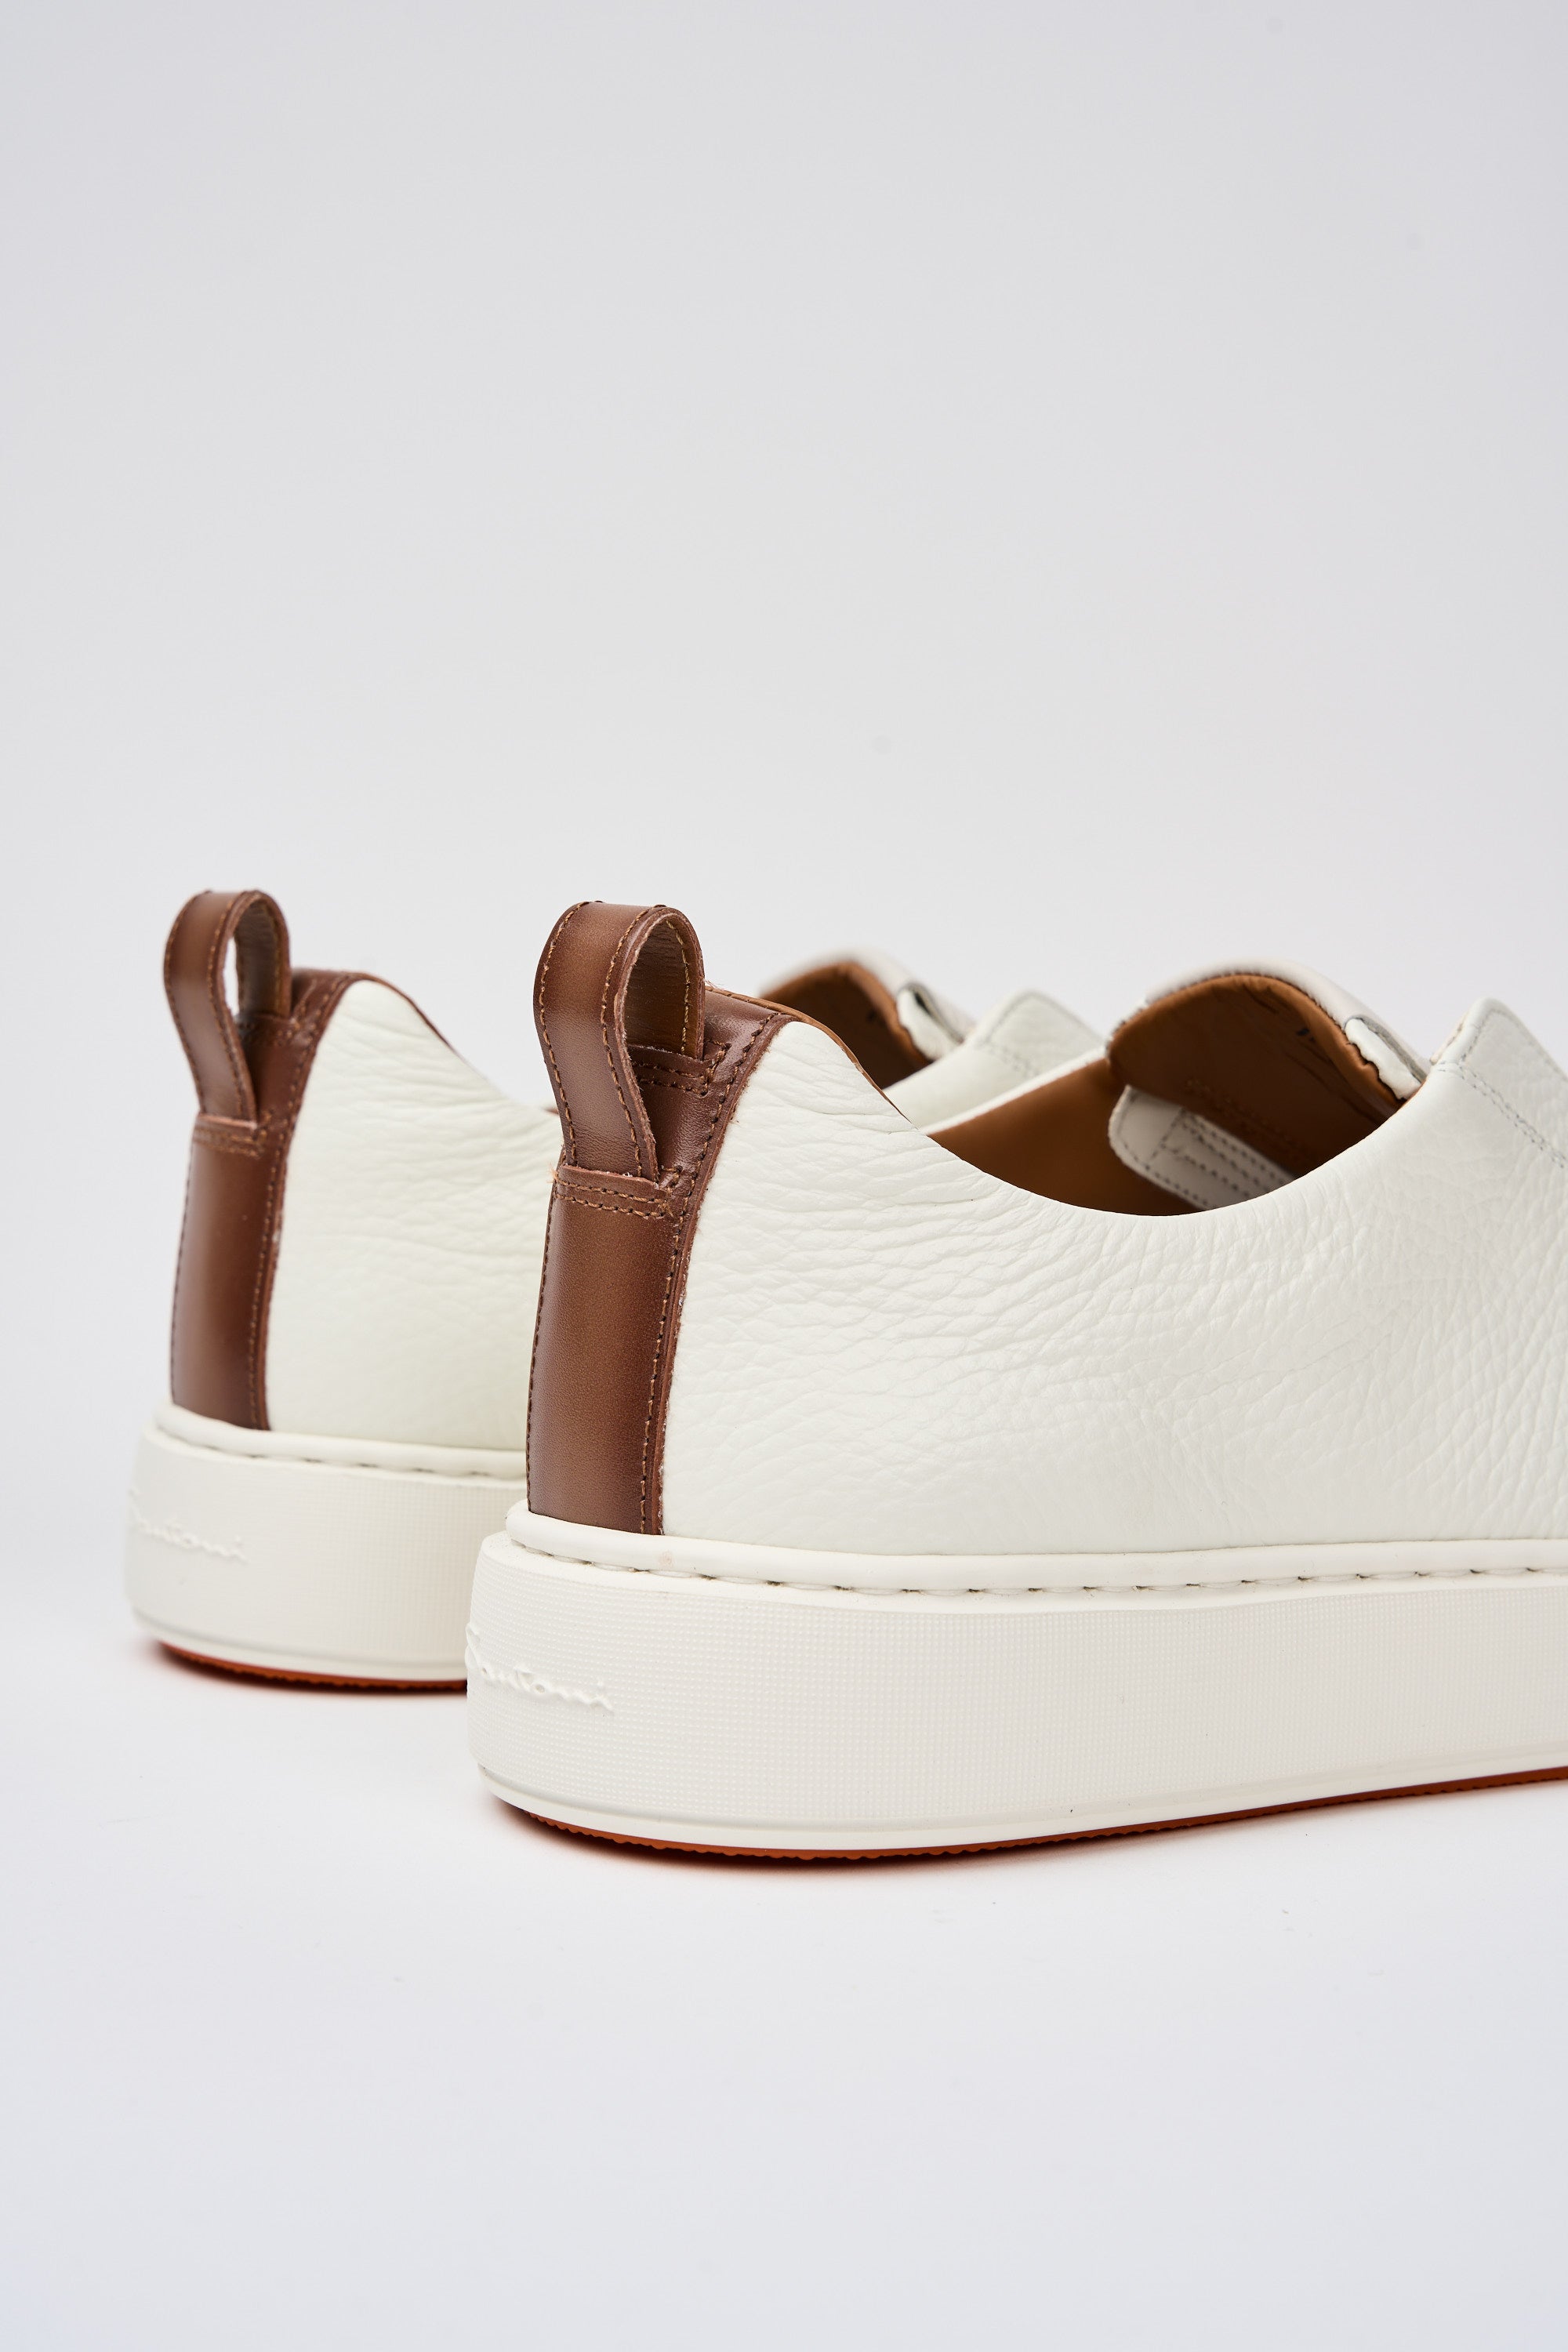 Santoni Slip On Leather Sneakers White-4